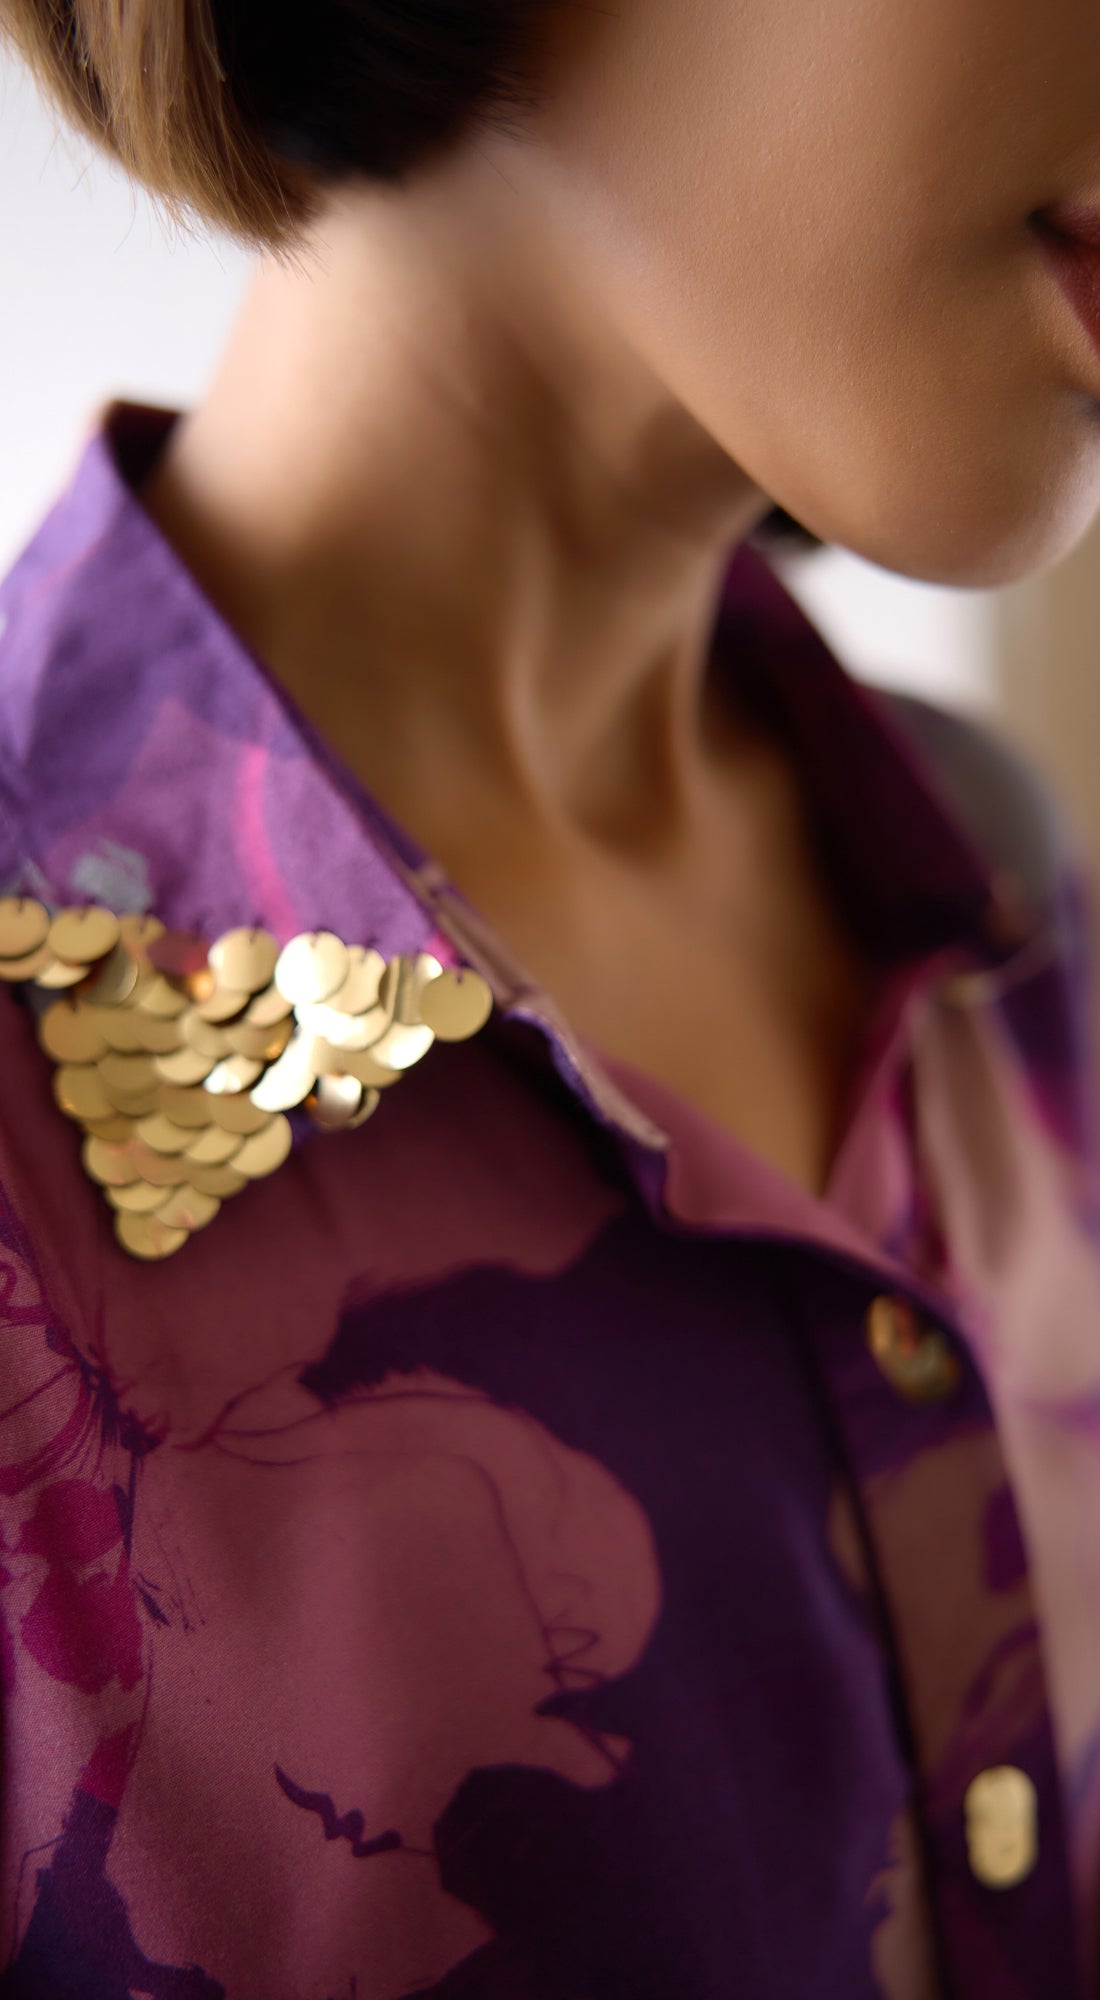 Purple Muslin Floral Shirt